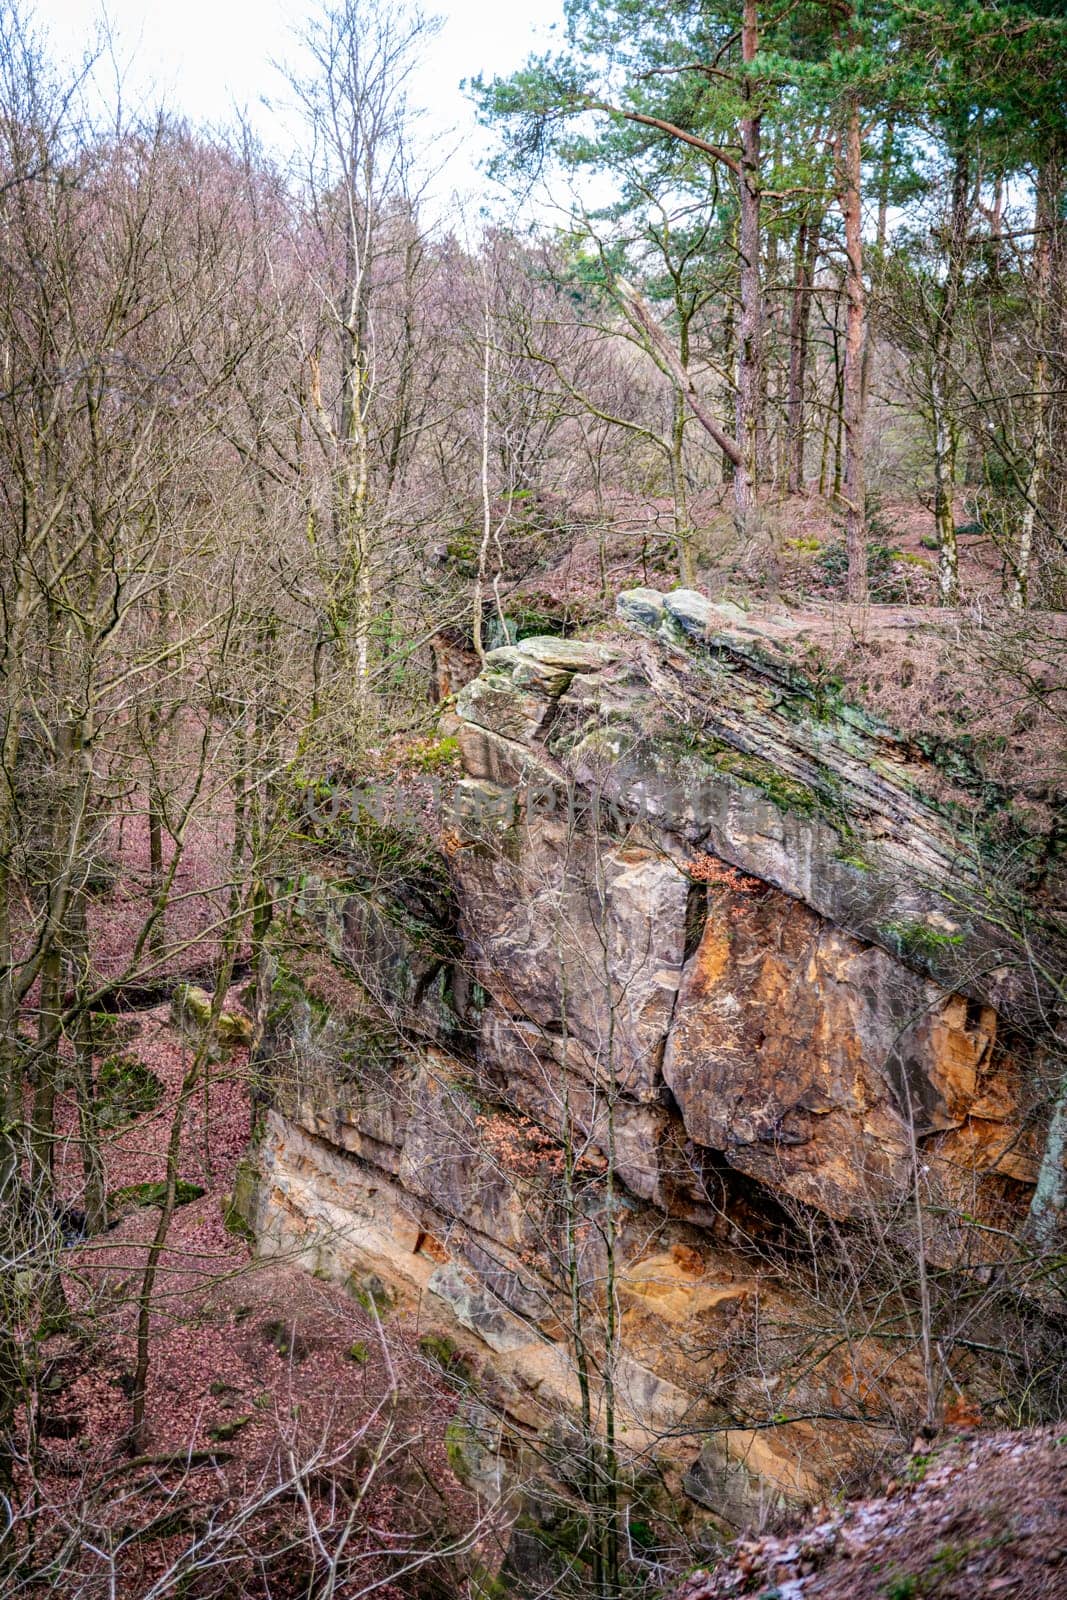 large rocks of Bentheim sandstone in the forest near the Bentheim Cliffs near the town of Bentheim in western Germany